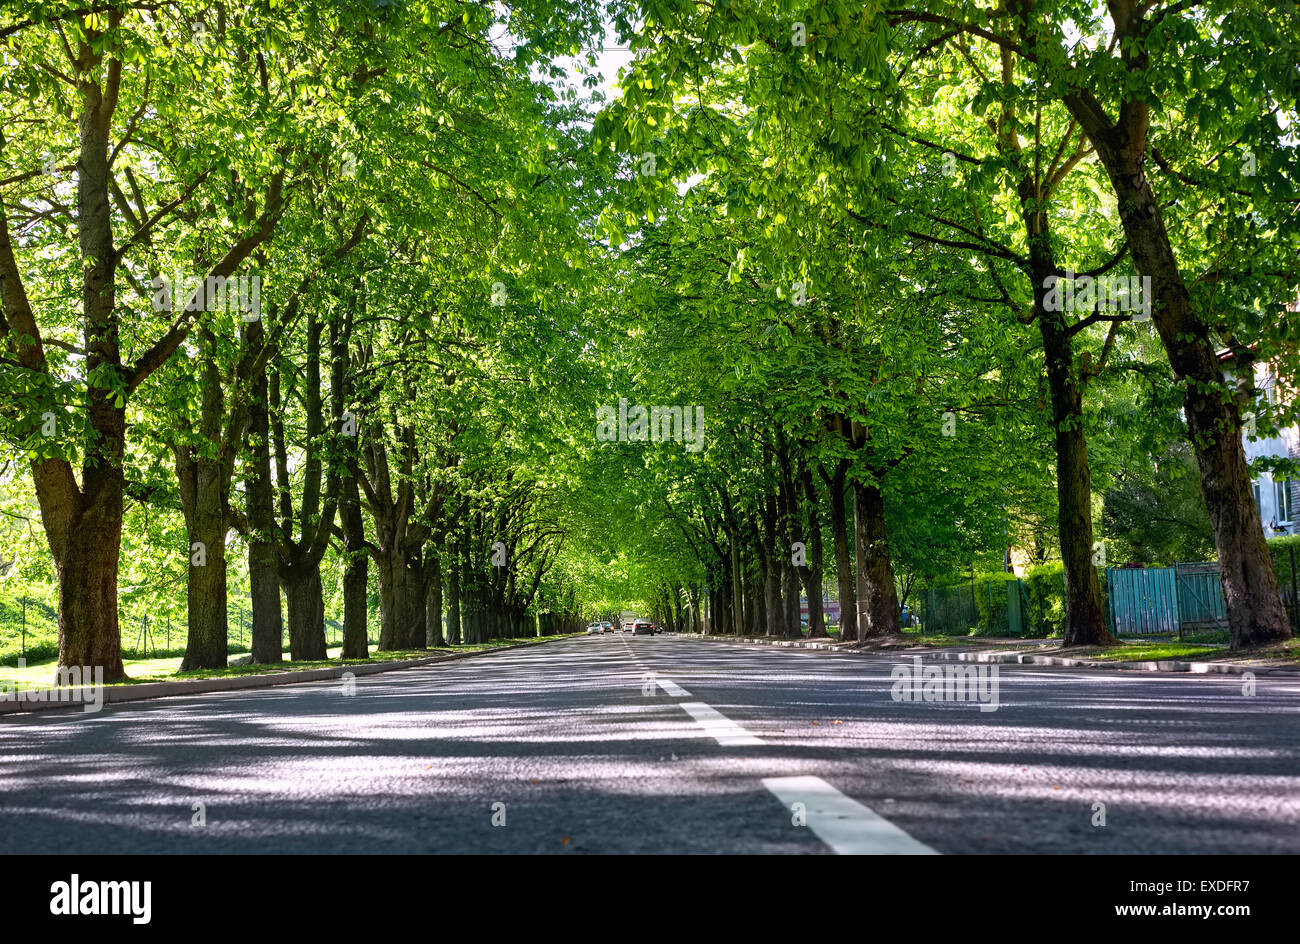 Highway with green trees in Tallinn. Estonia Stock Photo